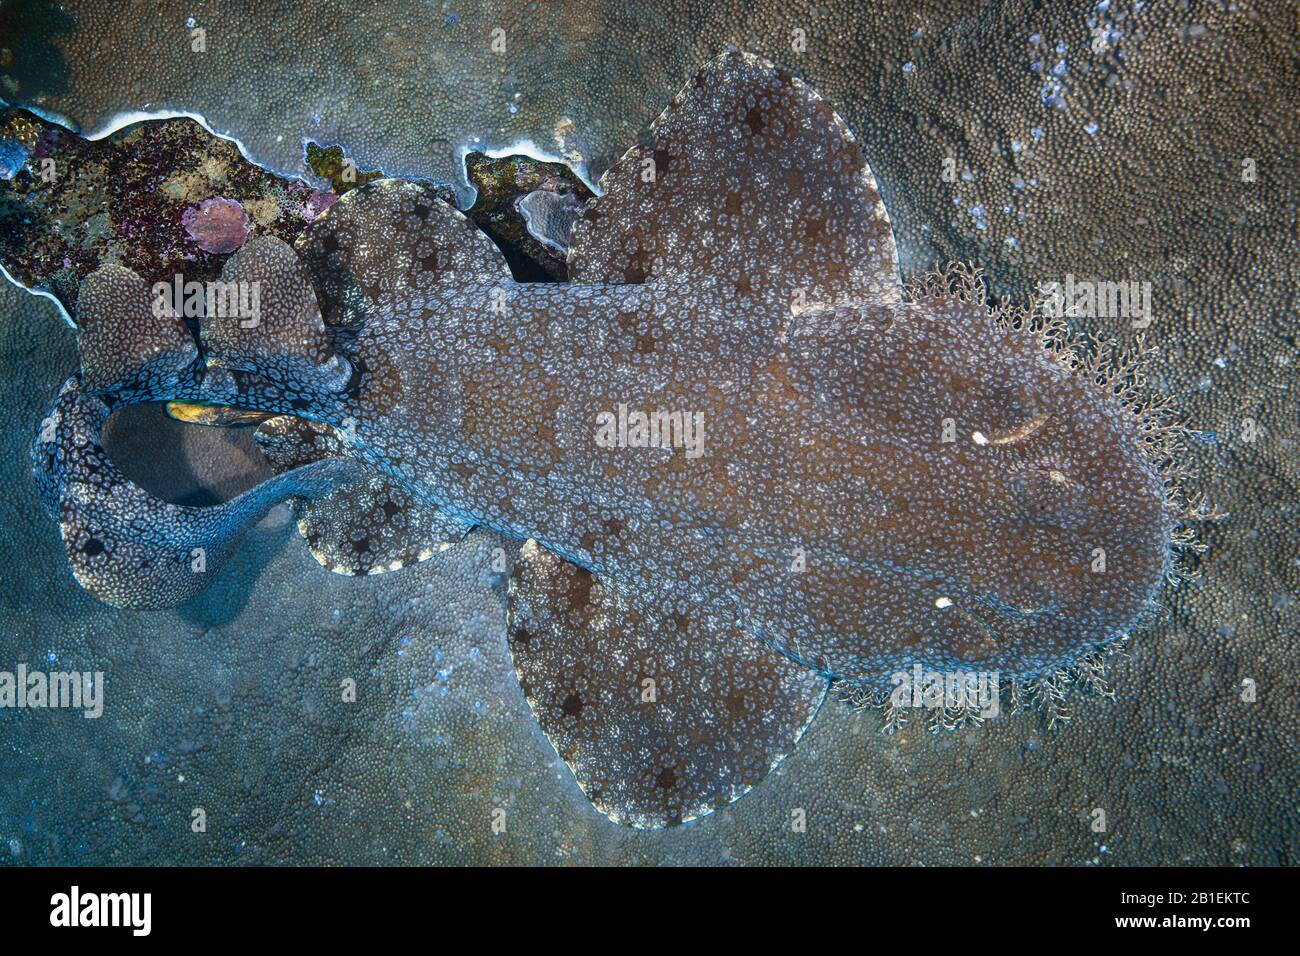 Tasselled wobbegong (Eucrossorhinus dasypogon) on the bottom, Raja Ampat, Indonesia Stock Photo